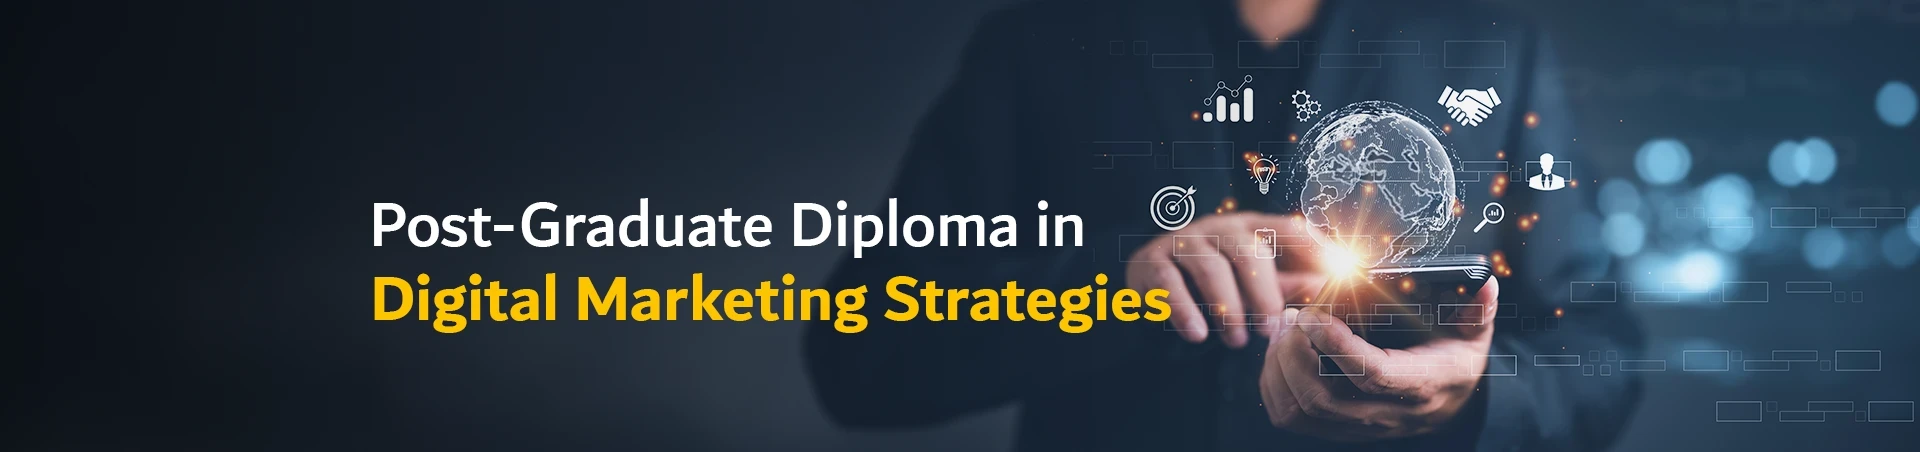 Post-Graduate Diploma in Digital Marketing Strategies